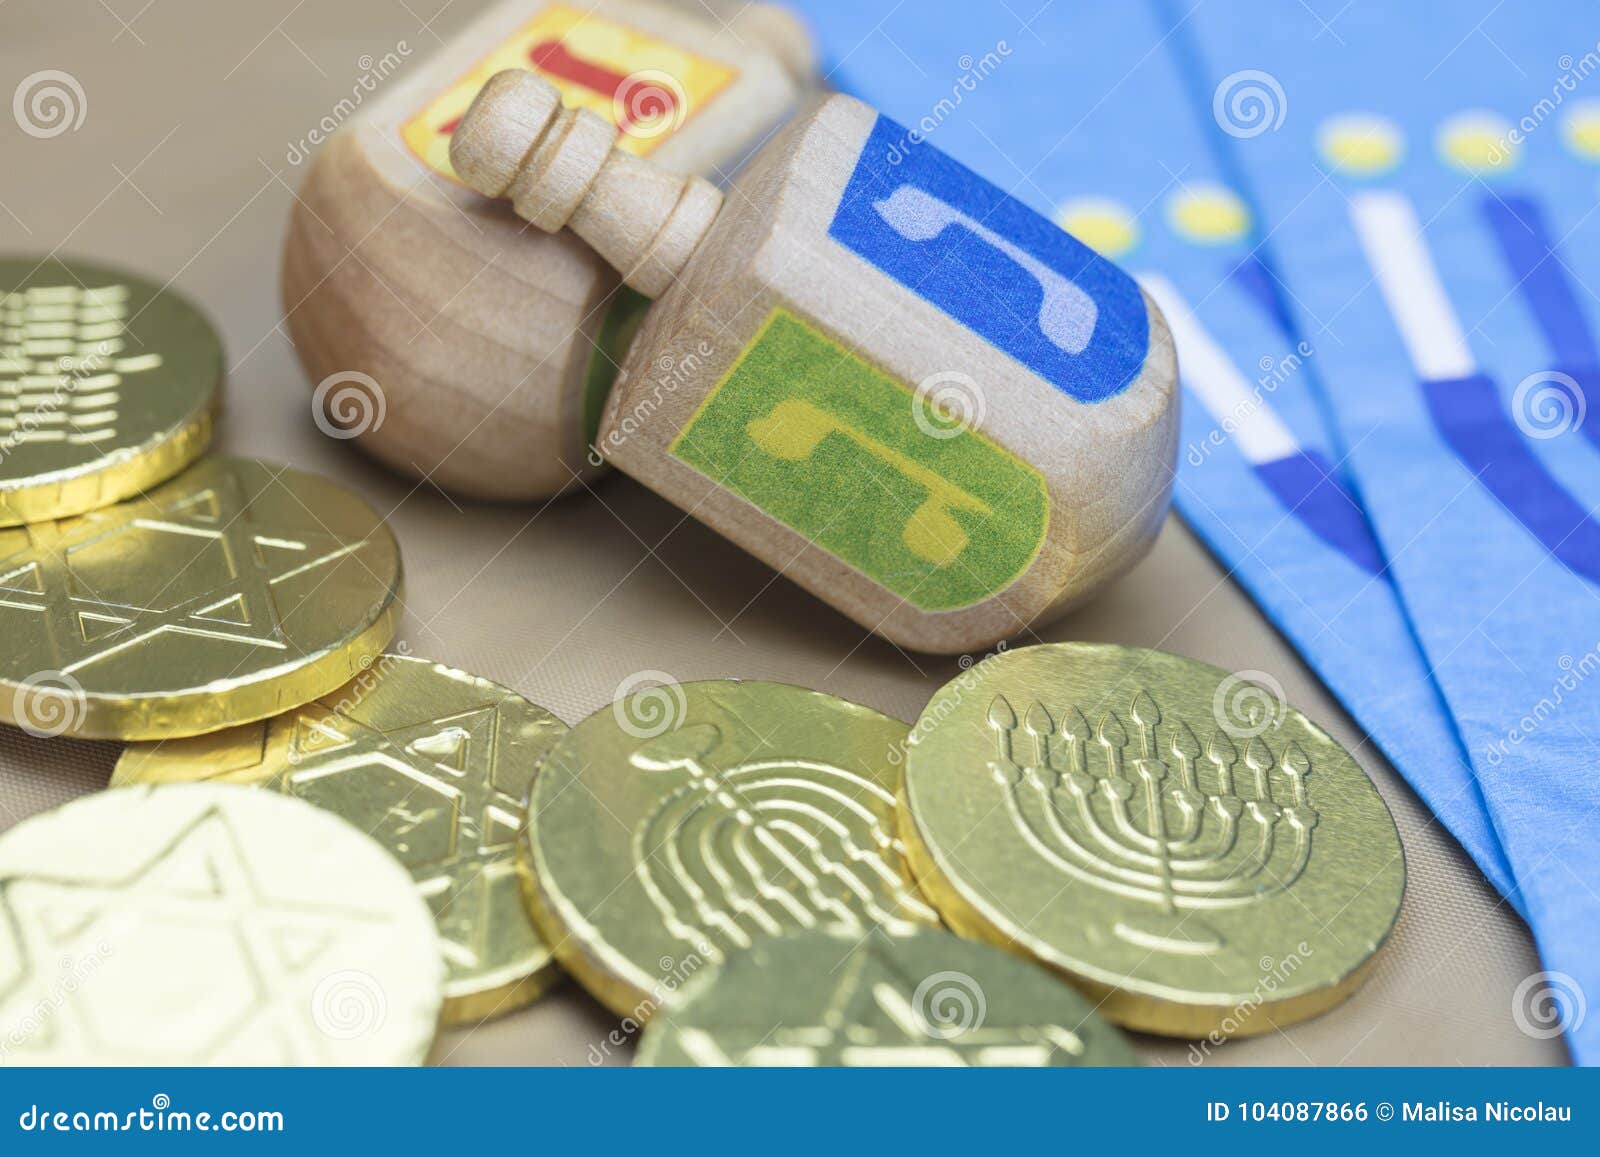 Hanukkah Dreidels, Napkins and Chocolate Gelt Coins Stock Photo - Image ...